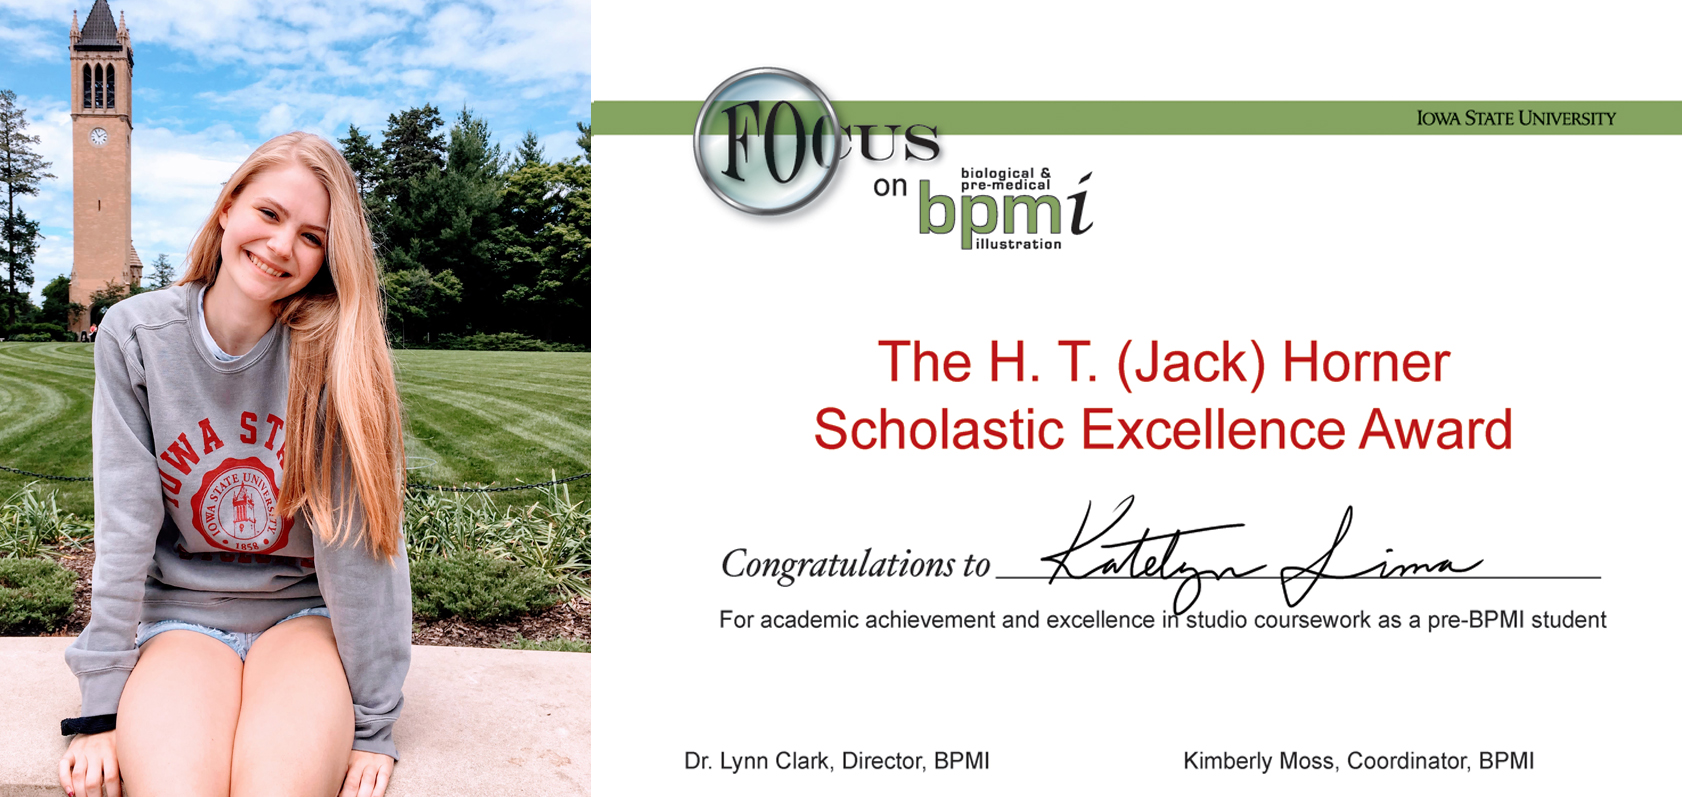 HT Jack Homer Scholastic Excellence Award - Katelyn Sima